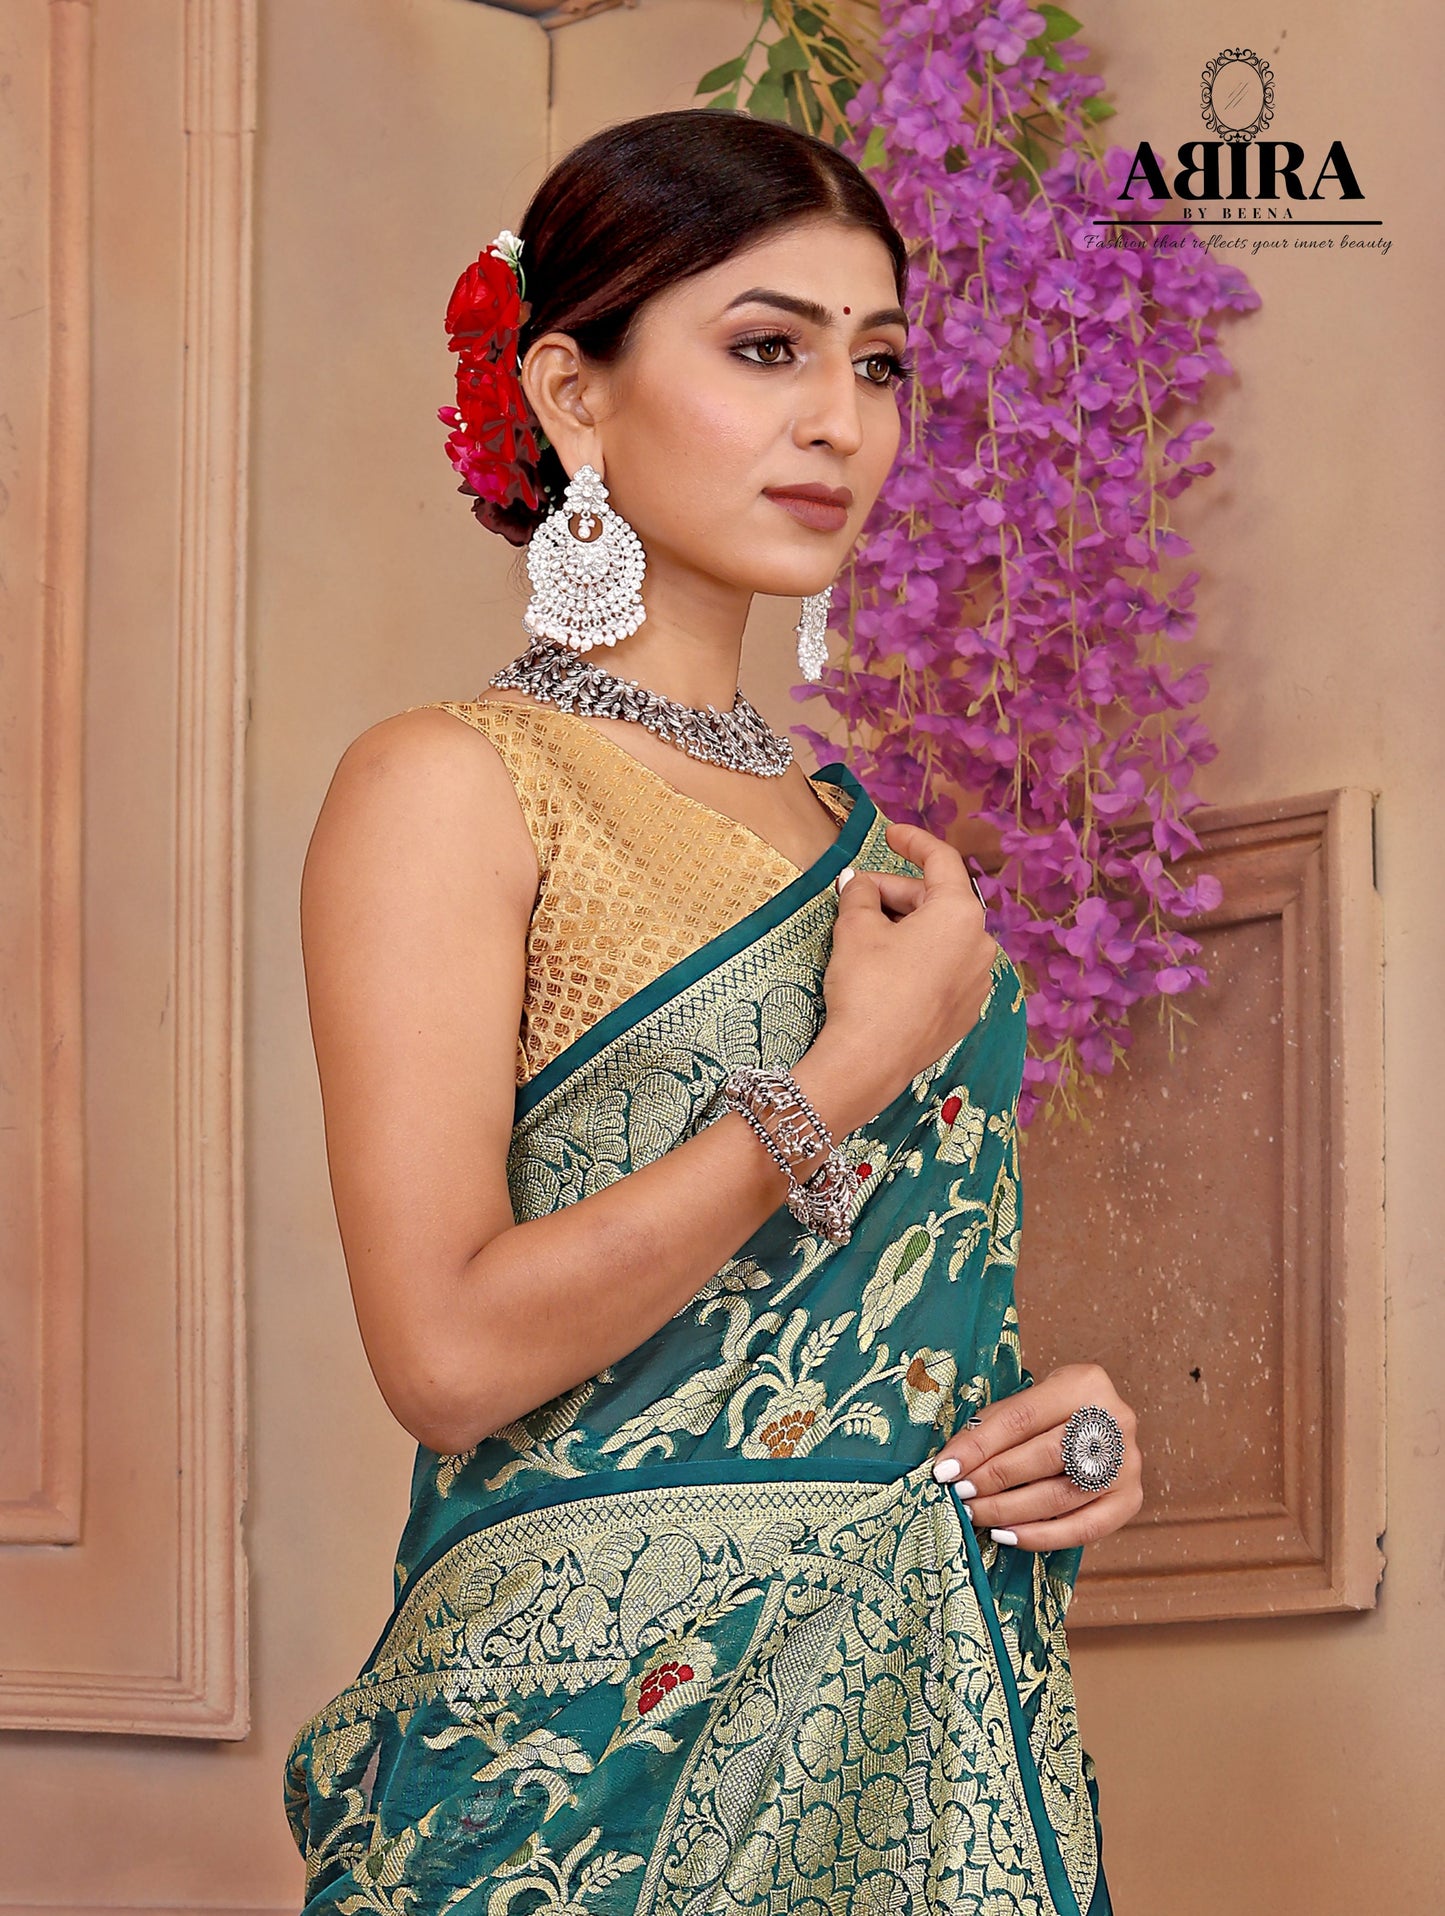 Turquoise Banaras Soft Georgette Jaal silk - AbirabyBeena